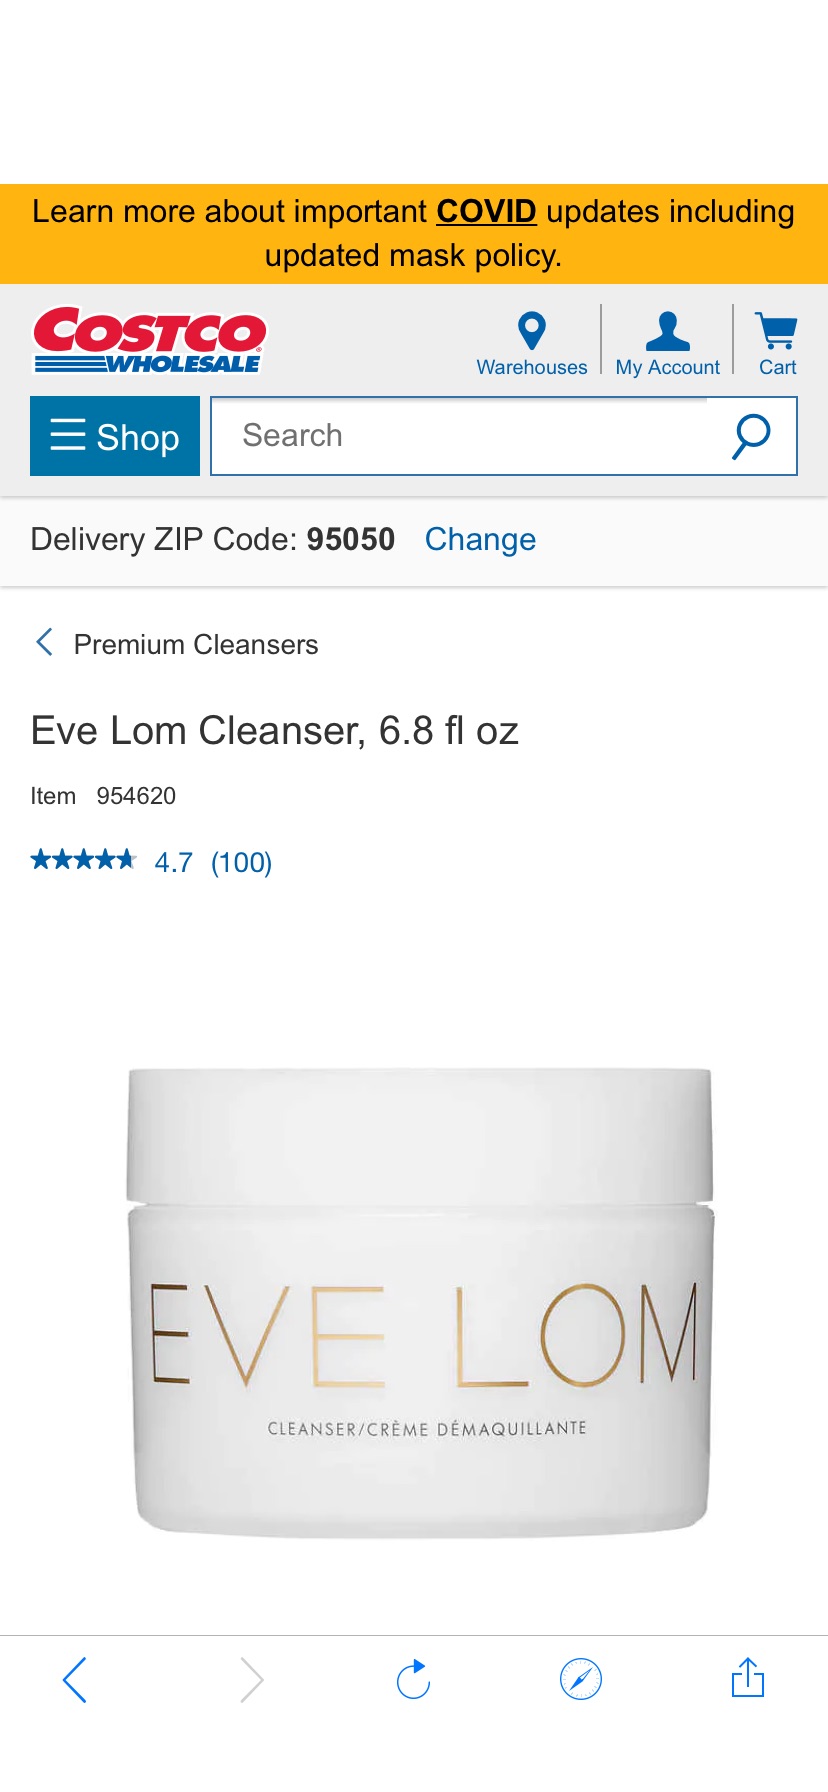 Eve Lom Cleanser卸妆膏, 6.8 fl oz | Costco